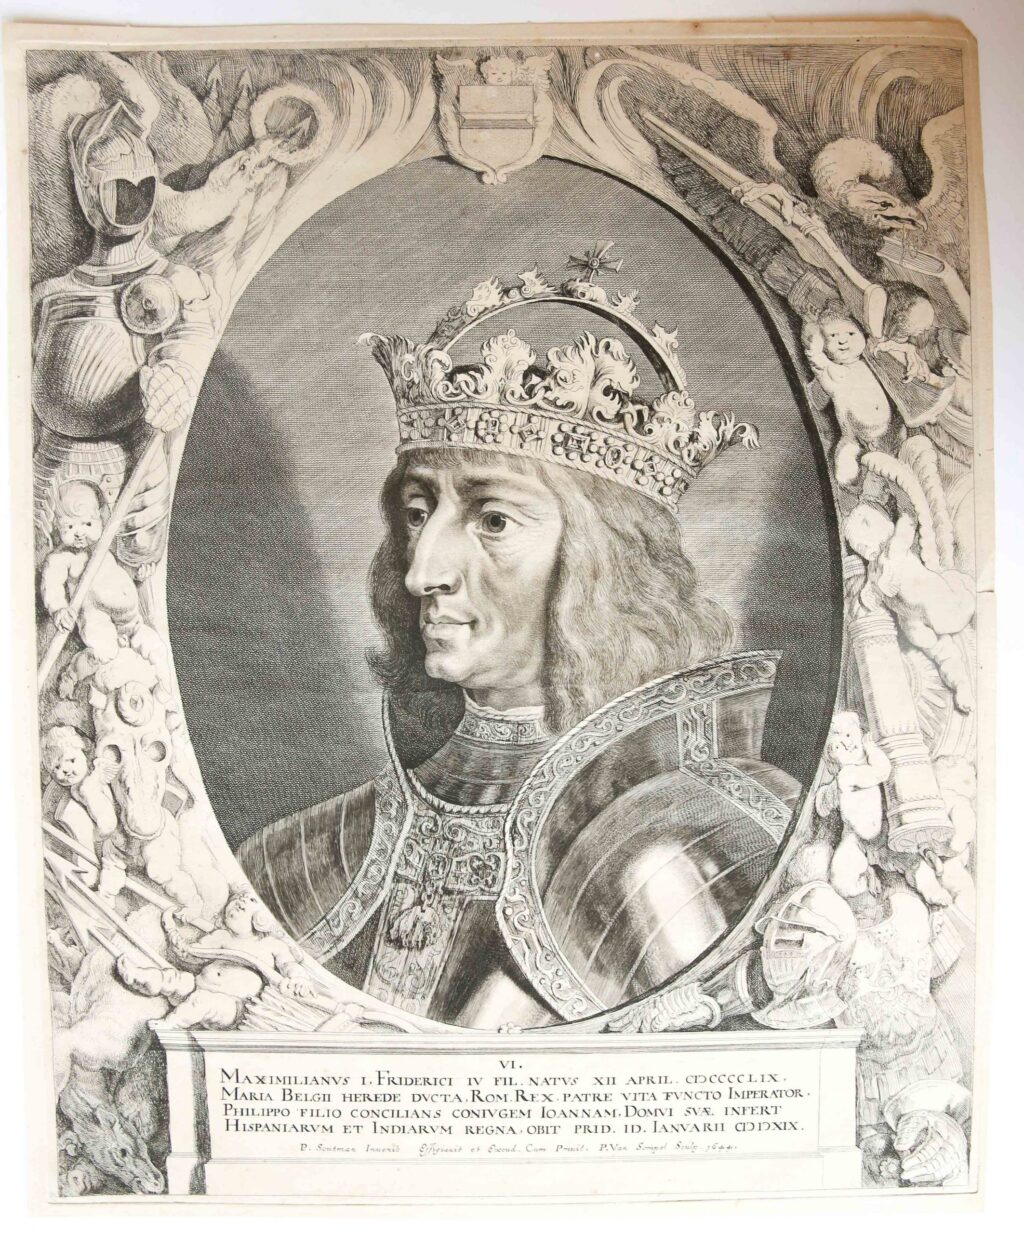 Ets en gravure/etching and engraving: Maximilianus I, Imperator (Emperor Maximilian I) [set title: Effigies imperatorum domus Austriacae, 1644] (Keizer Maximiliaan I).